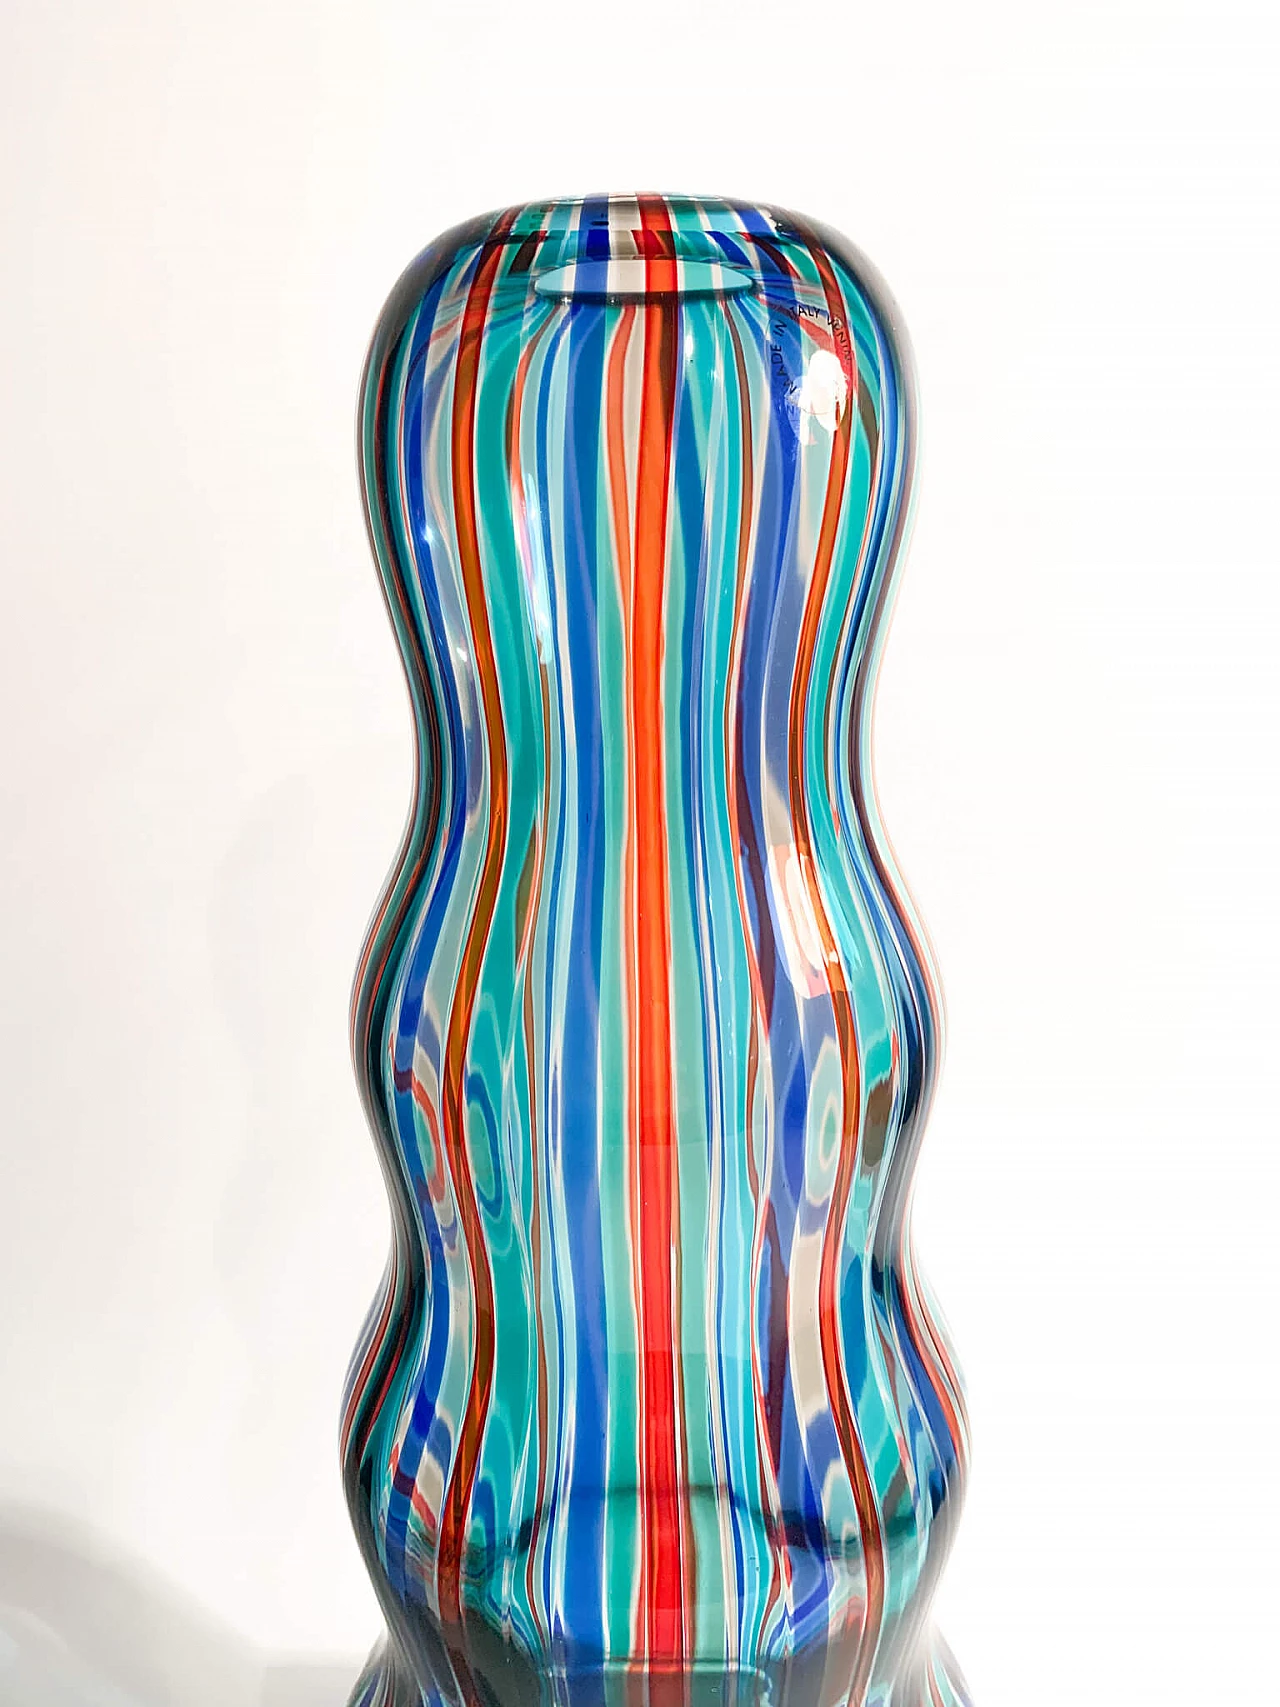 Arado vase in Murano glass by Alessandro Mendini for Venini, 1988 2